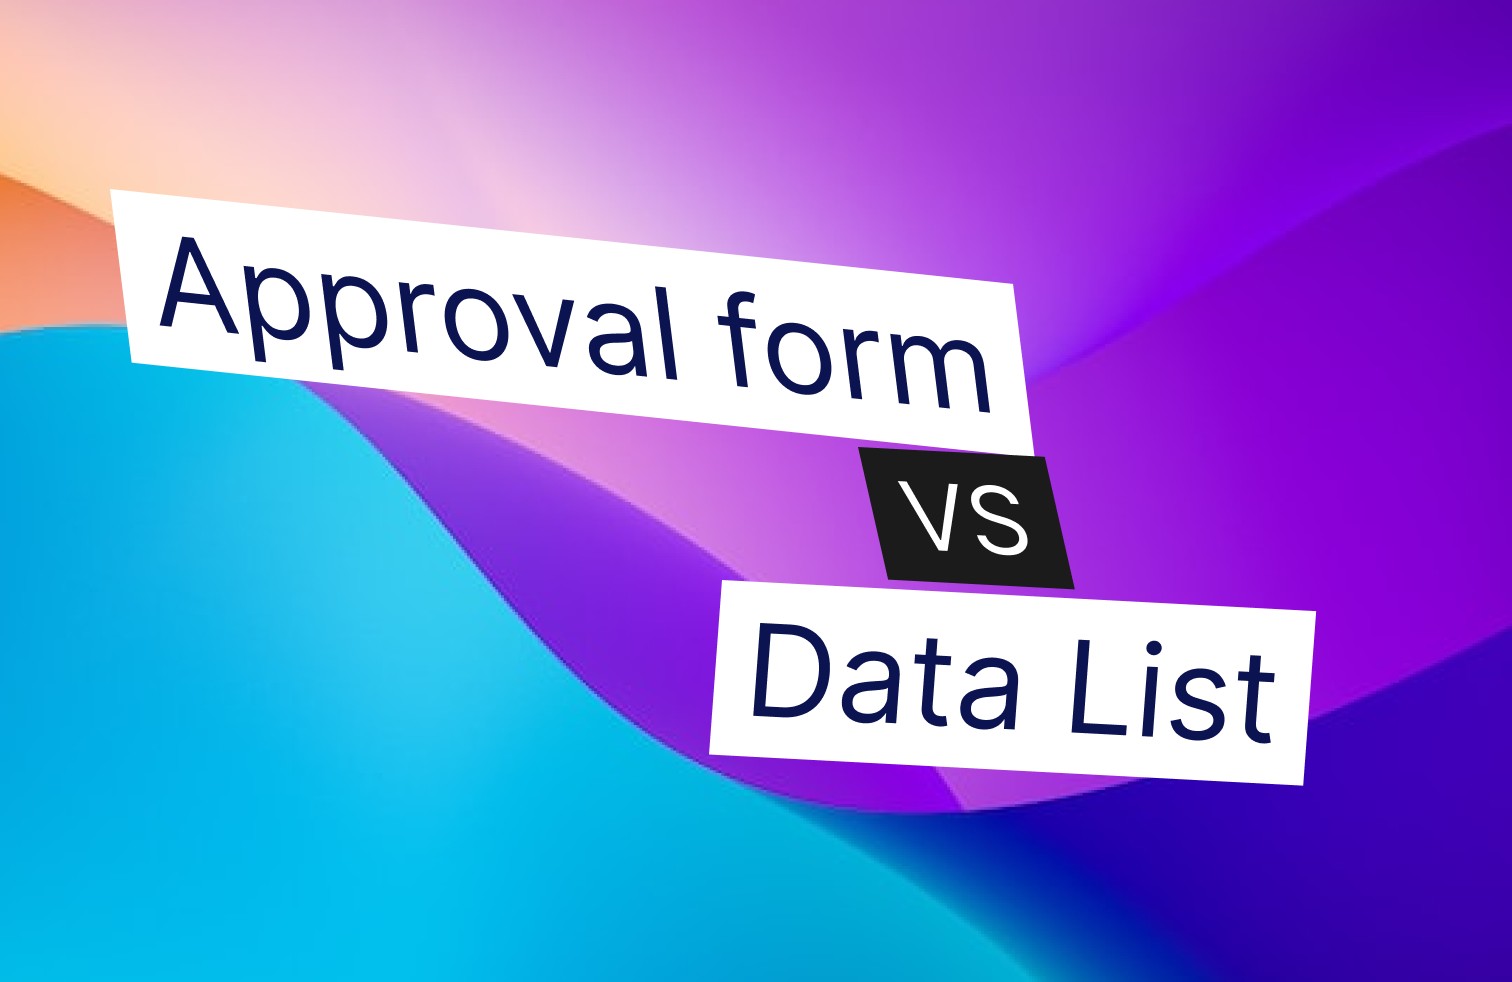 Approval form vs data list